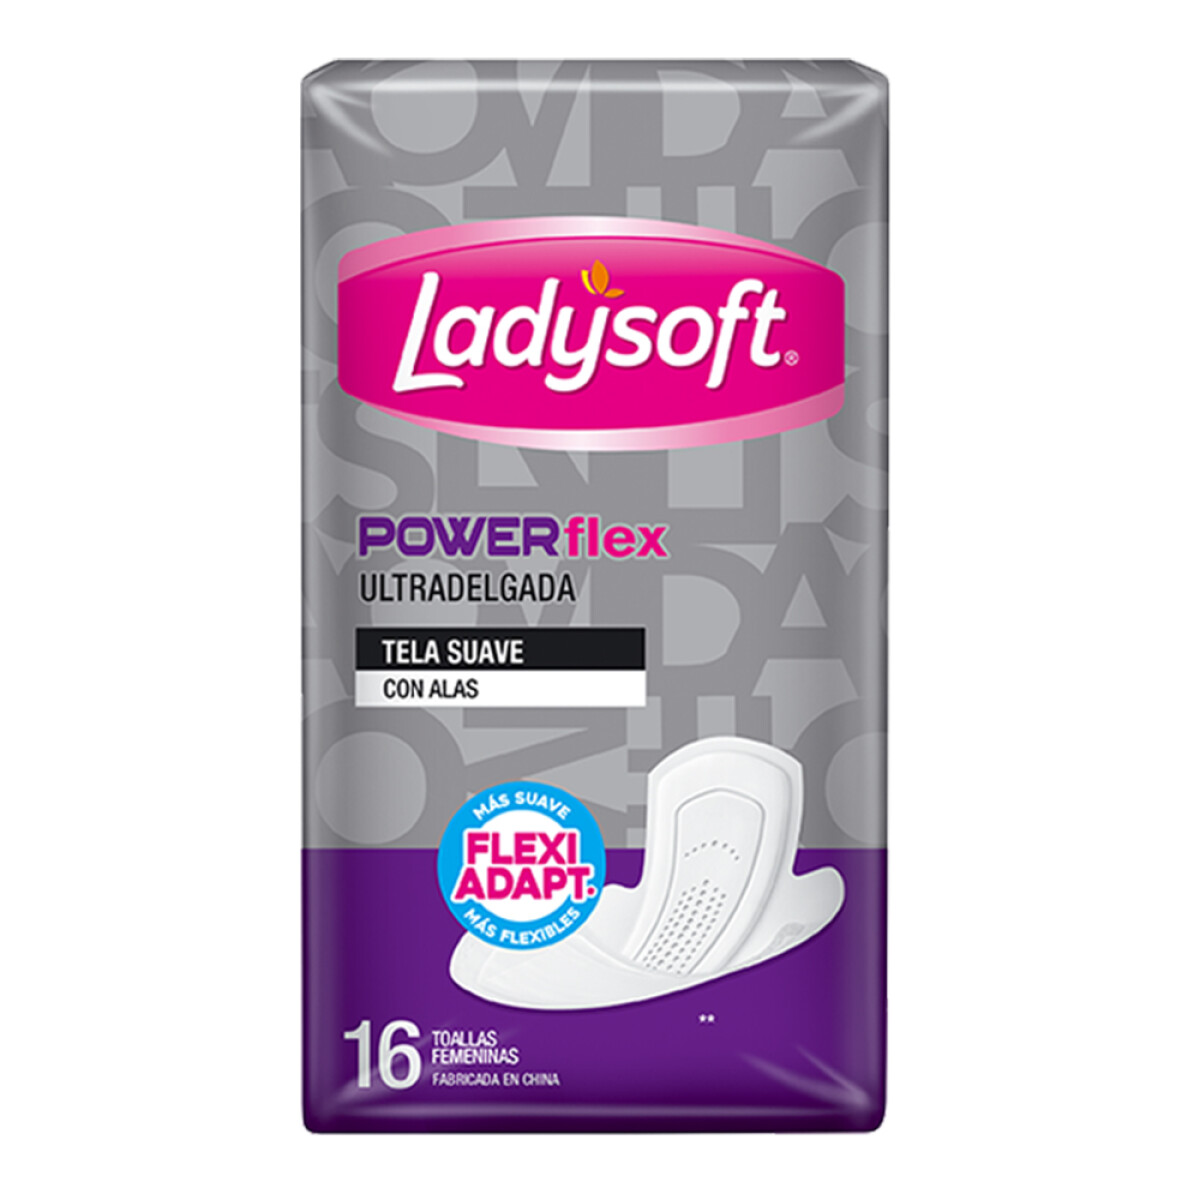 Ladysoft Powerflex Ud 16 Uds. 